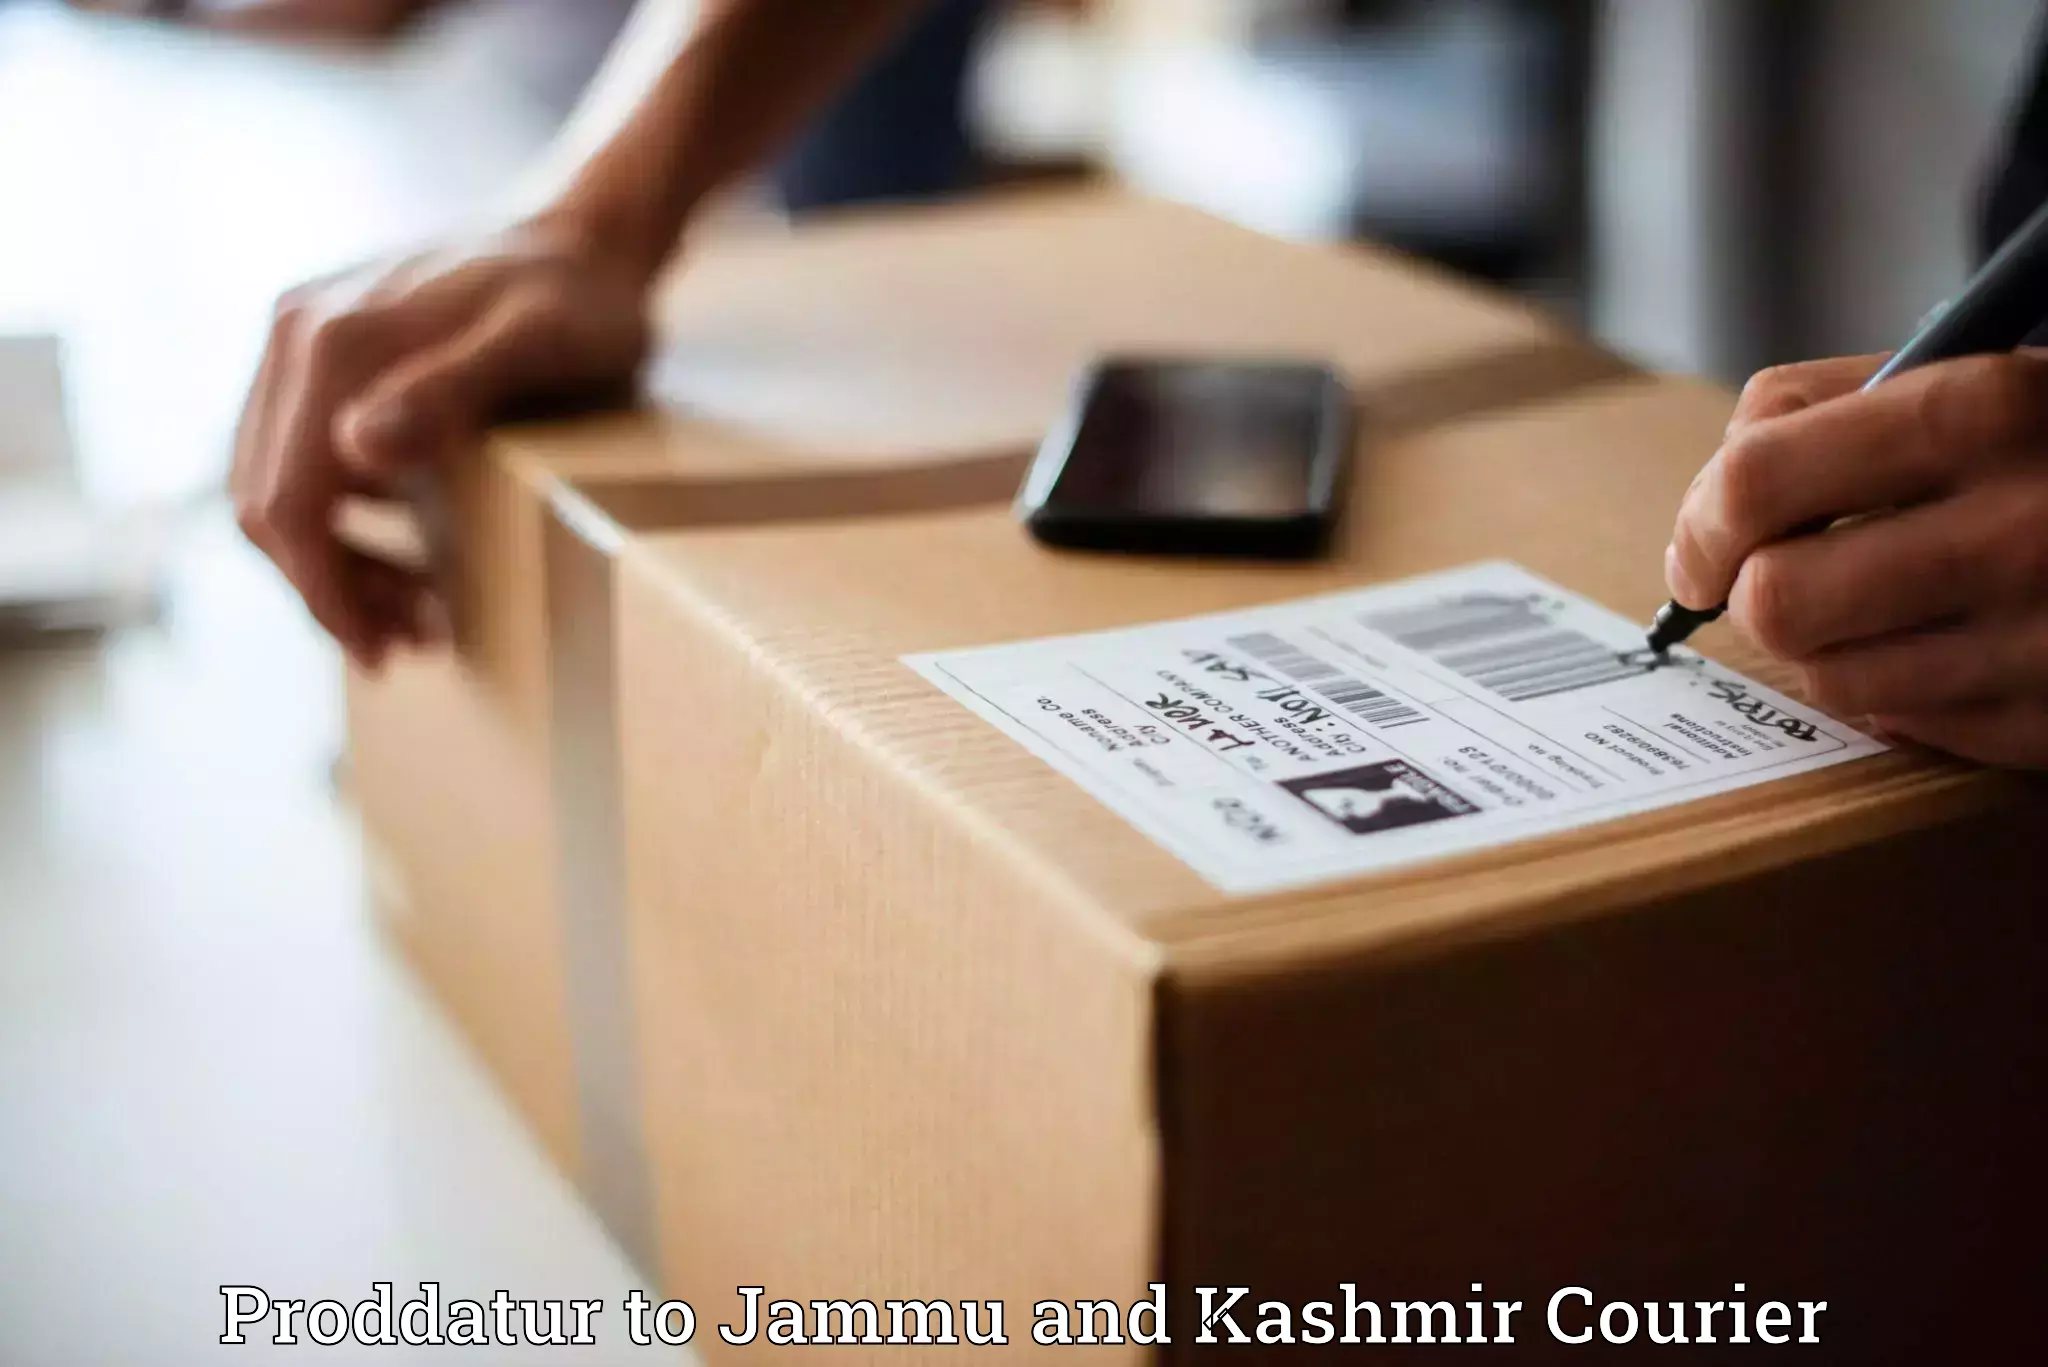 Courier services Proddatur to Srinagar Kashmir